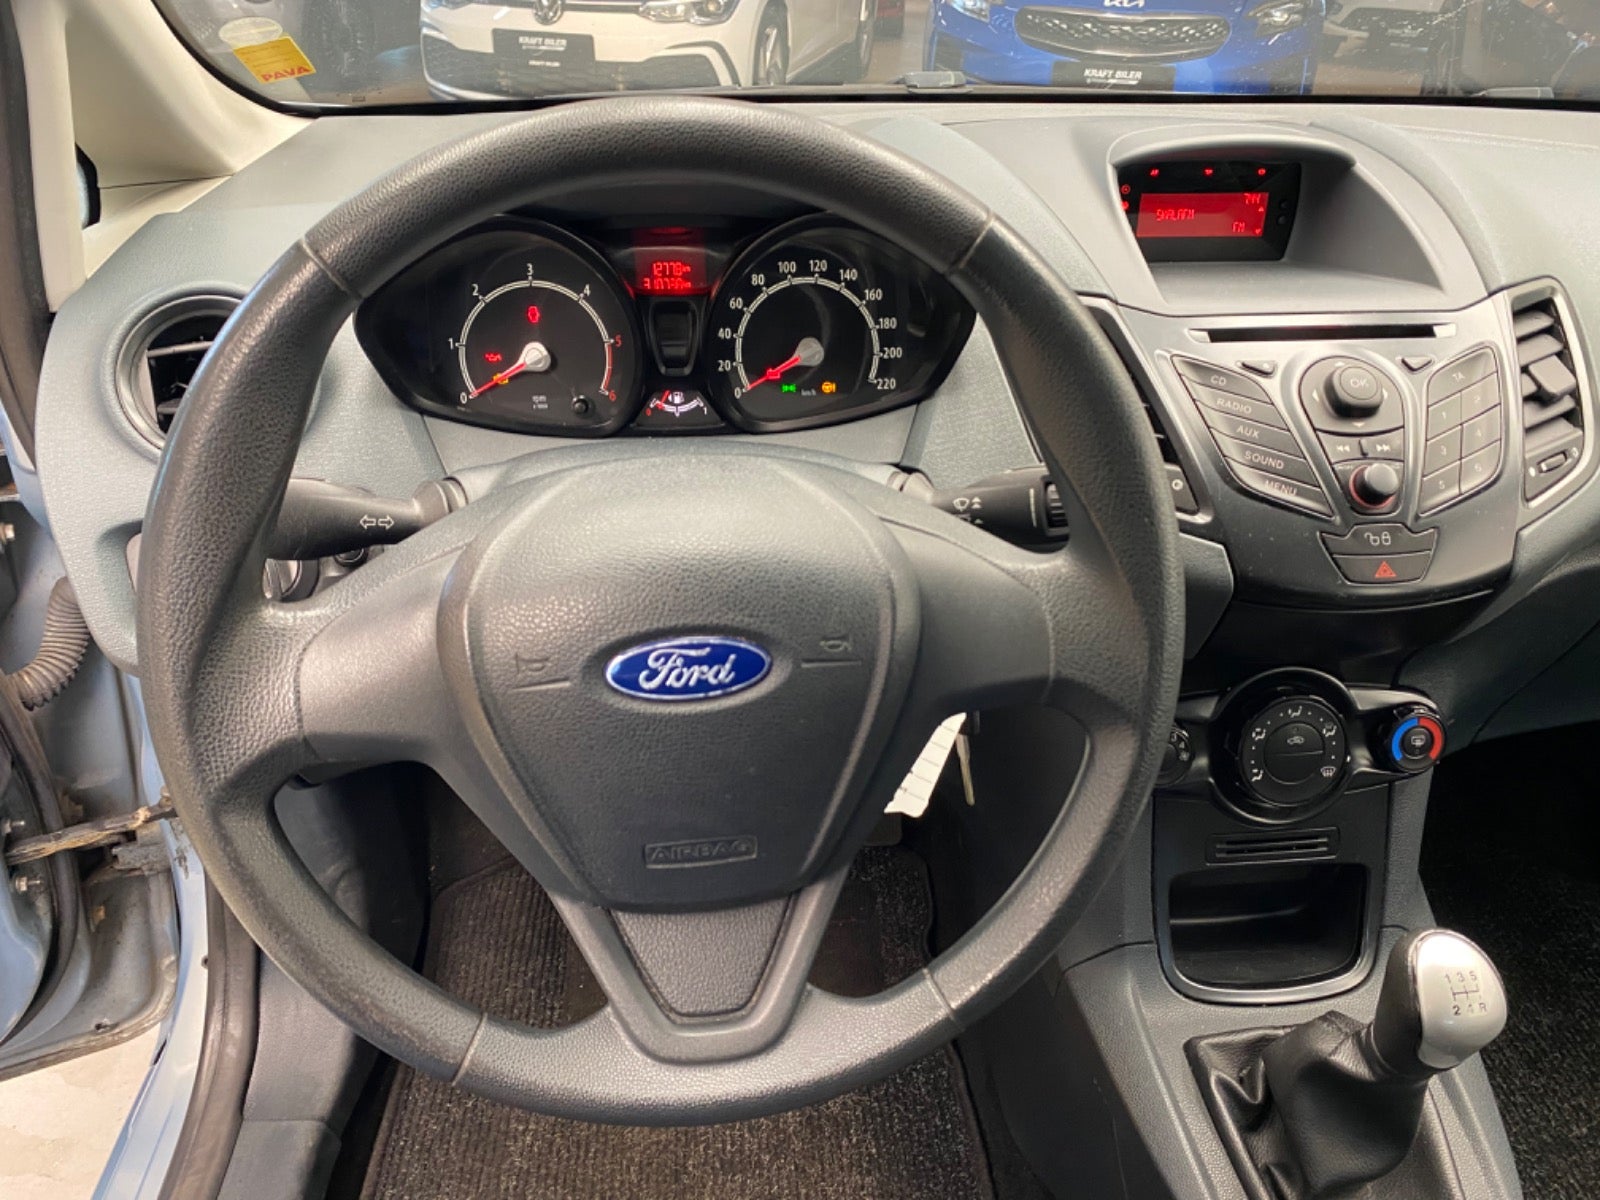 Billede af Ford Fiesta 1,4 TDCi 68 Ambiente